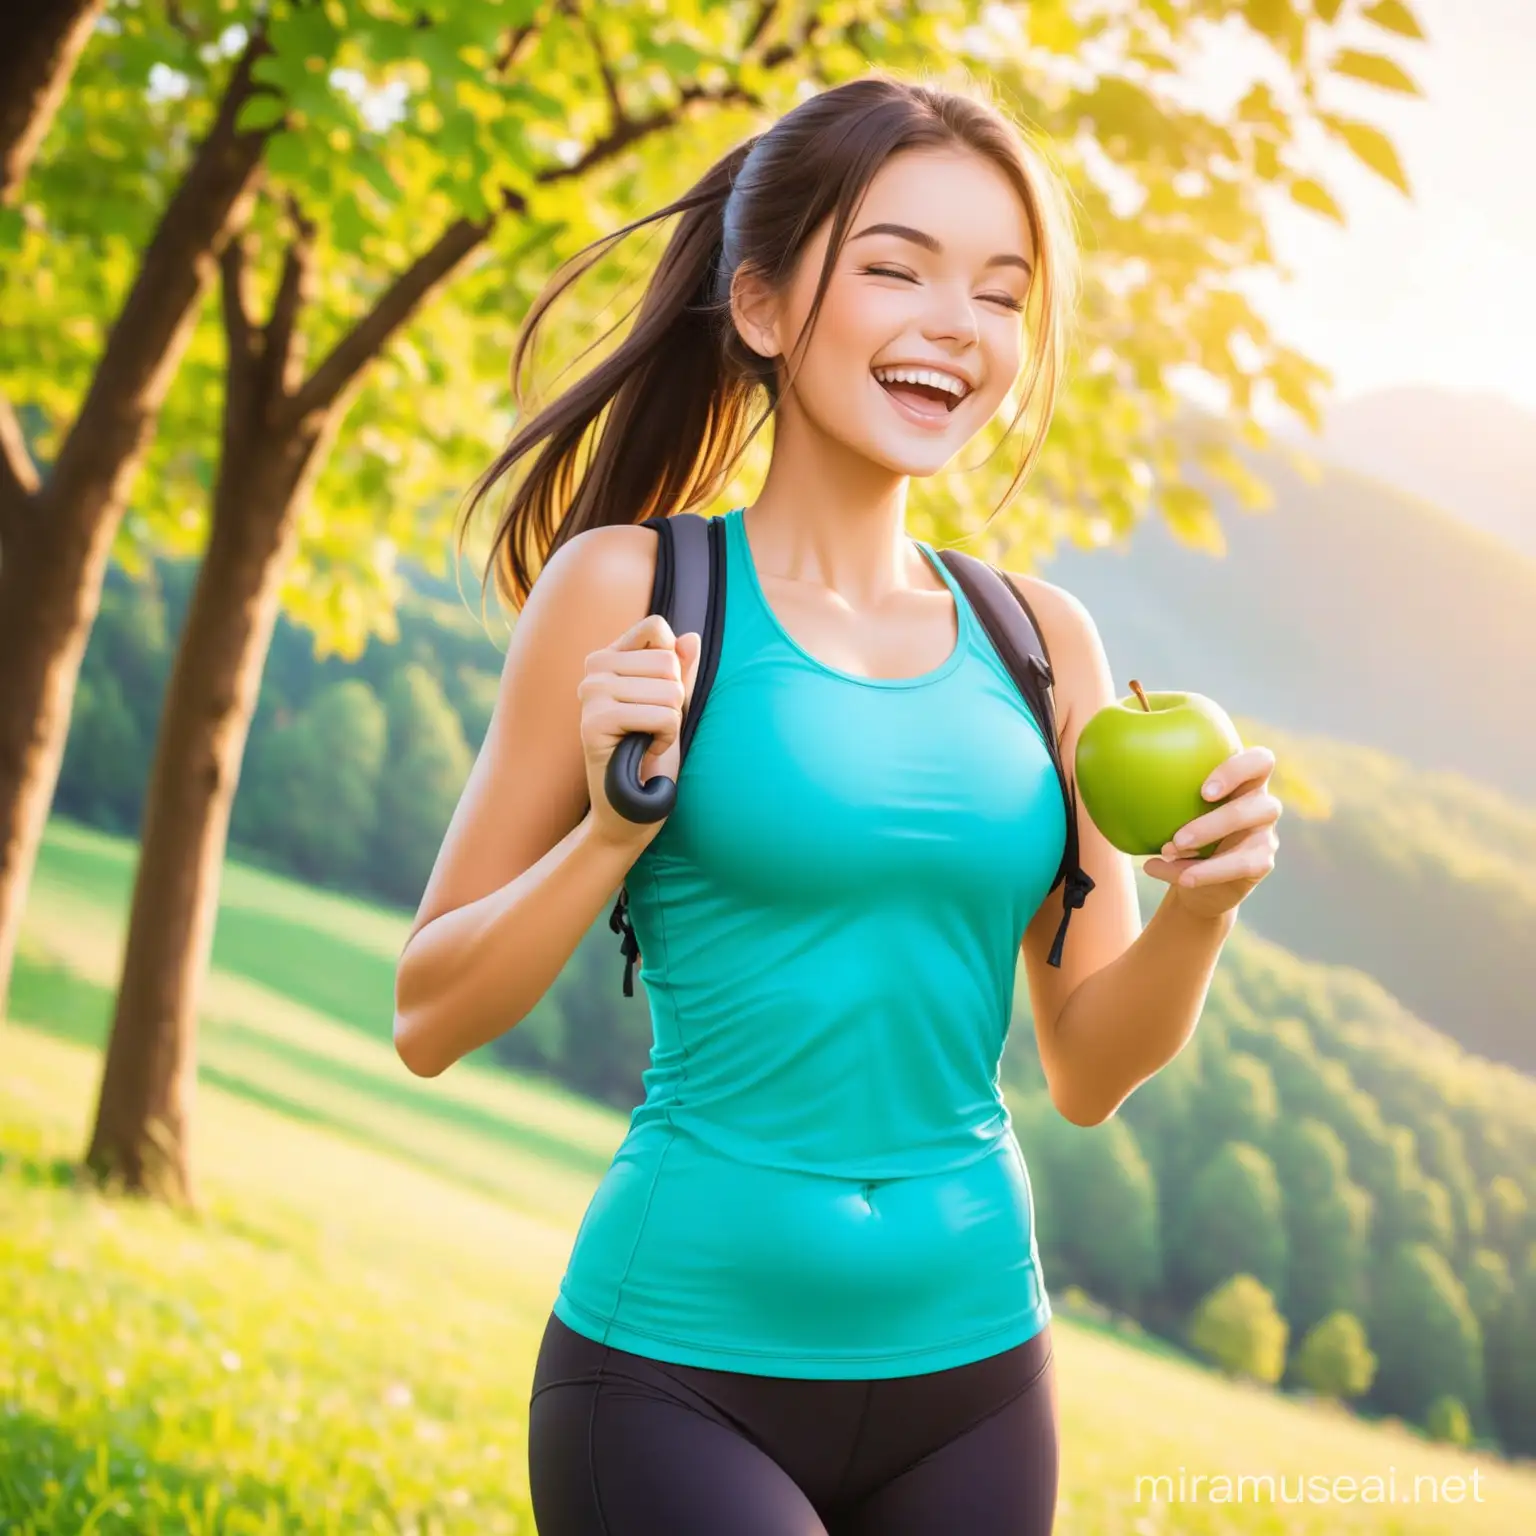 Joyful Individual Embracing Outdoor Wellness